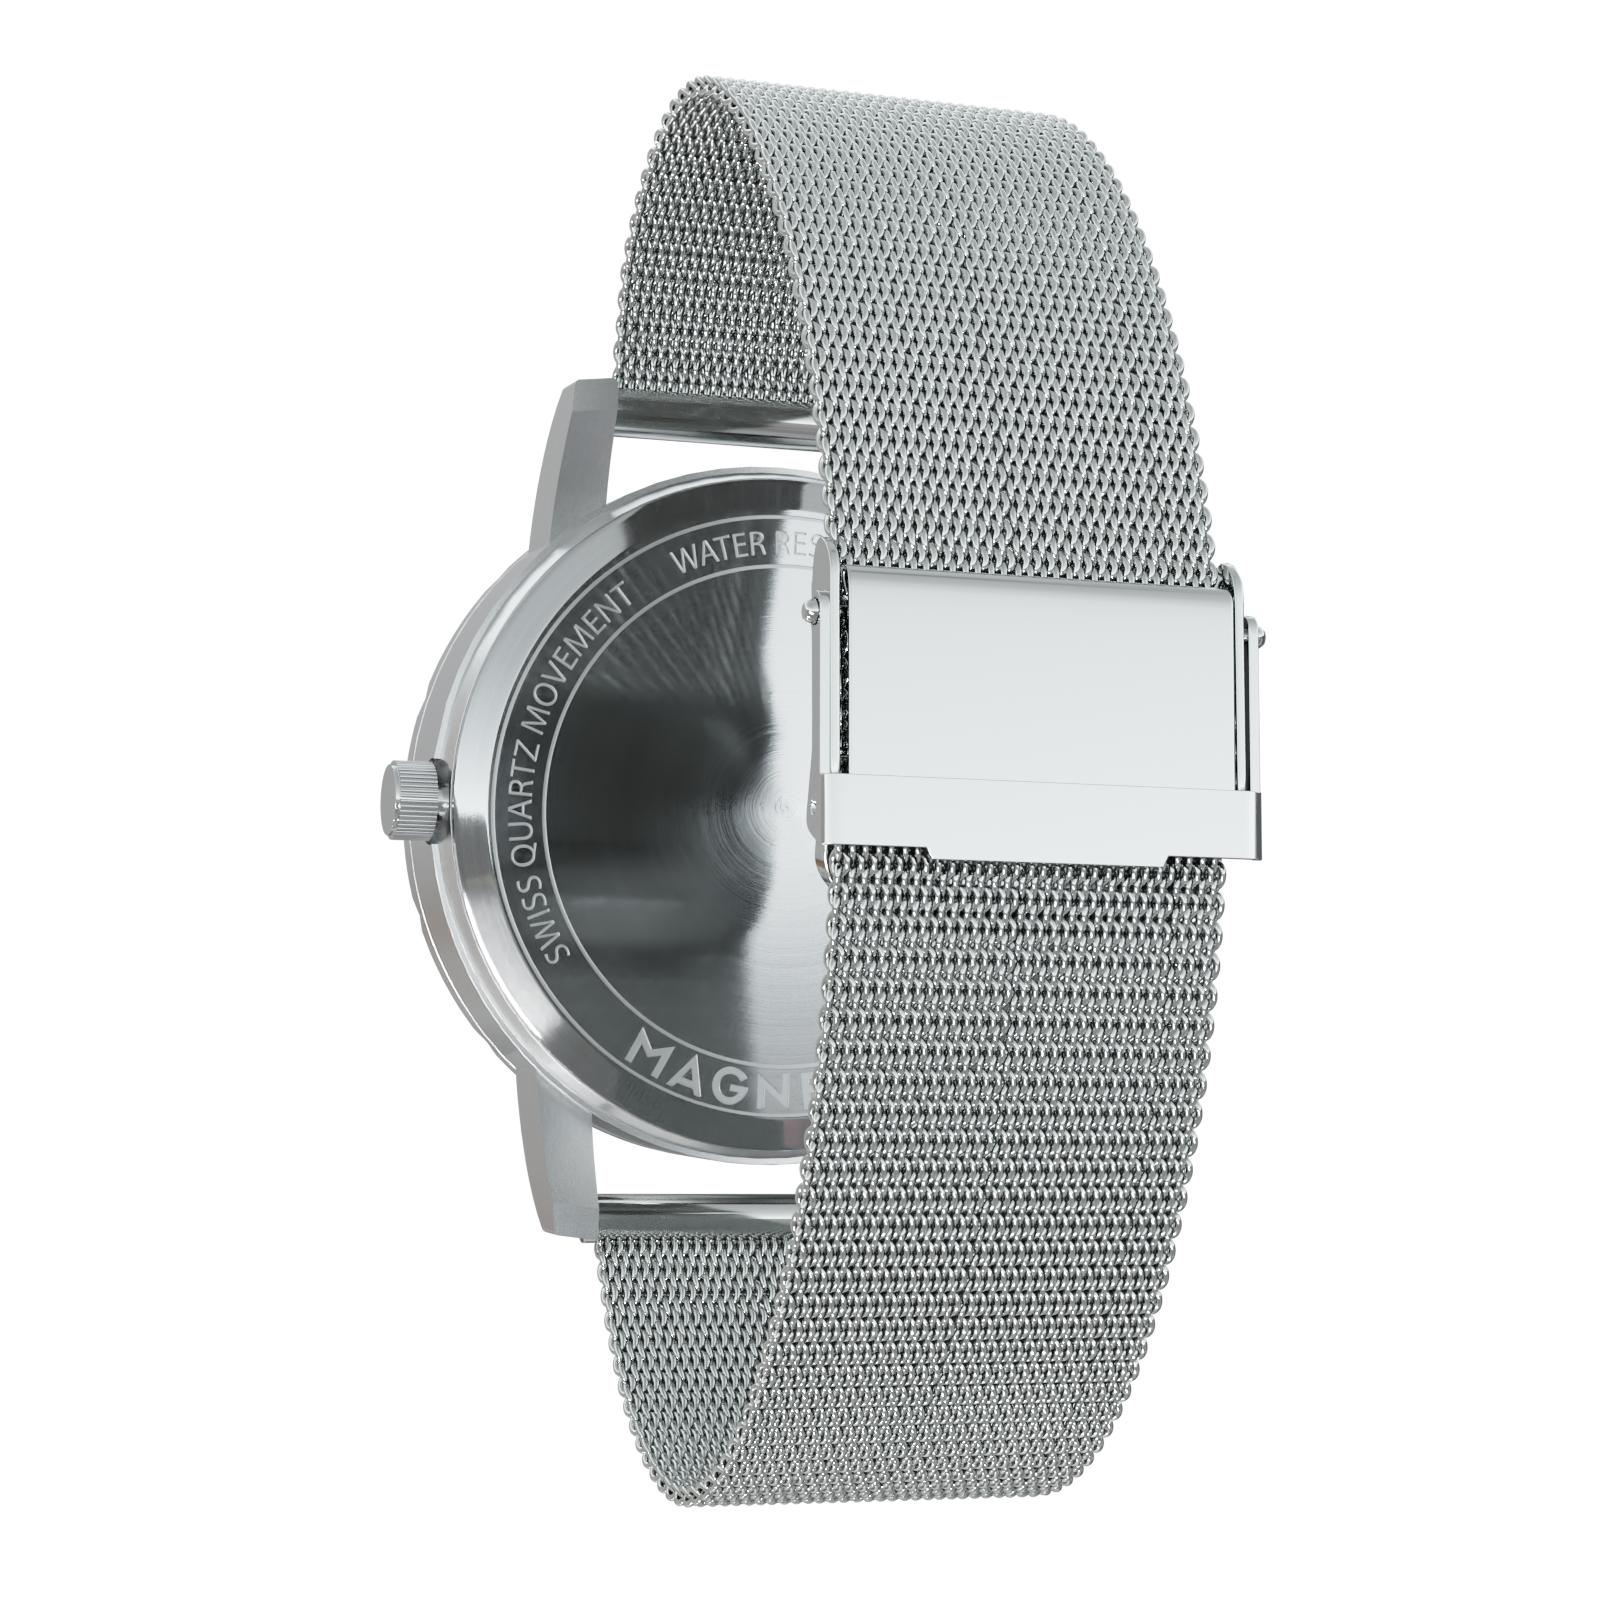 Magneto-Watch-Maschenarmband-Sicherheitsverschluss-Silber-Side